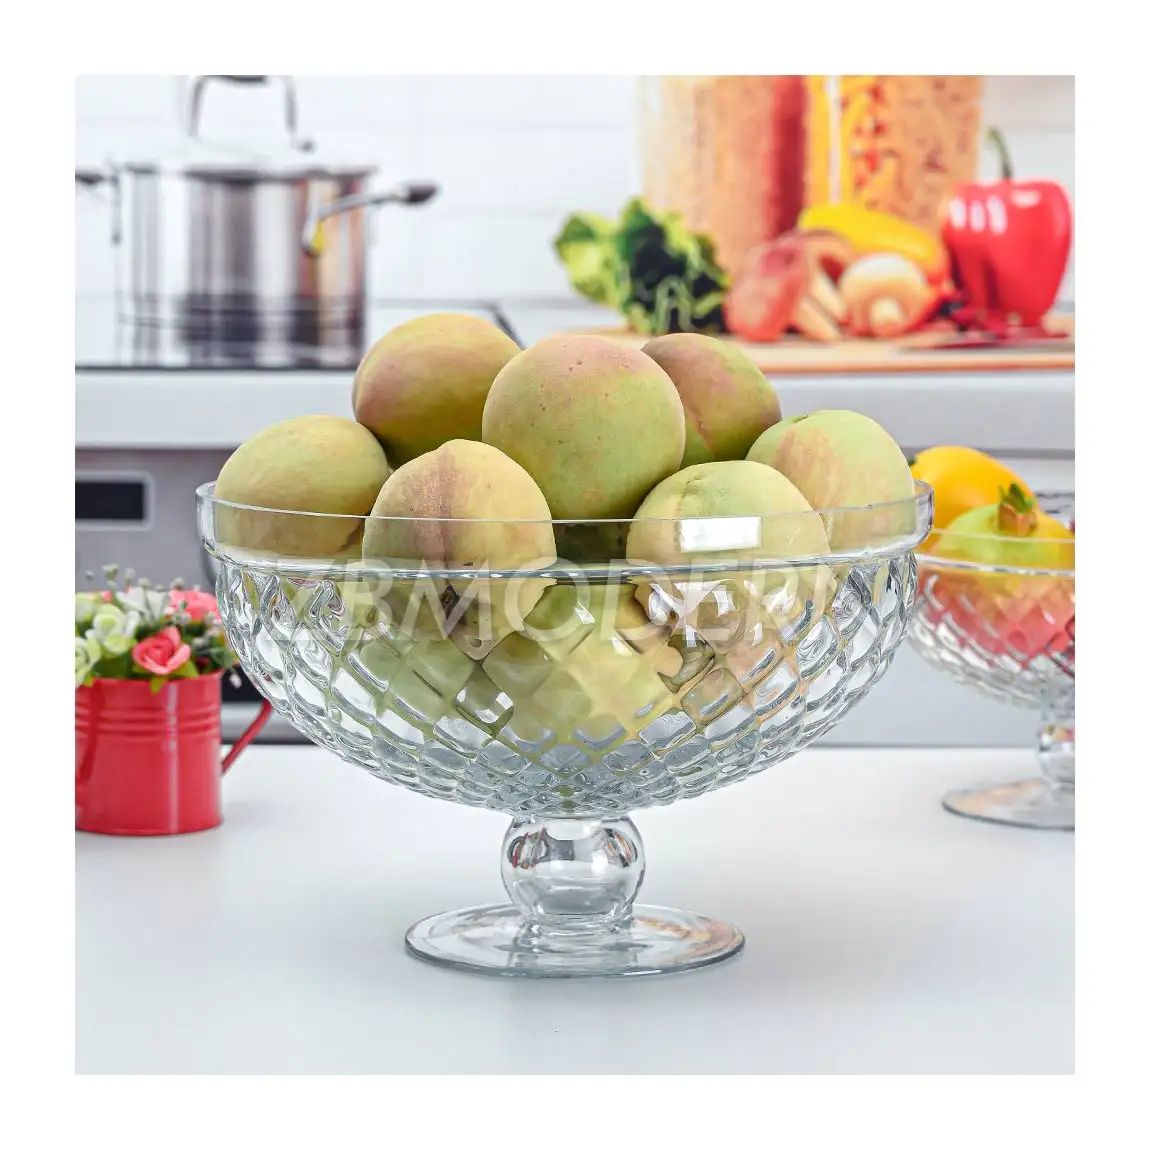 Fruit Basket Chocolate Dining Table Decorative Clear Glass Fruit Bowl Glass Fruit Basket With Stand